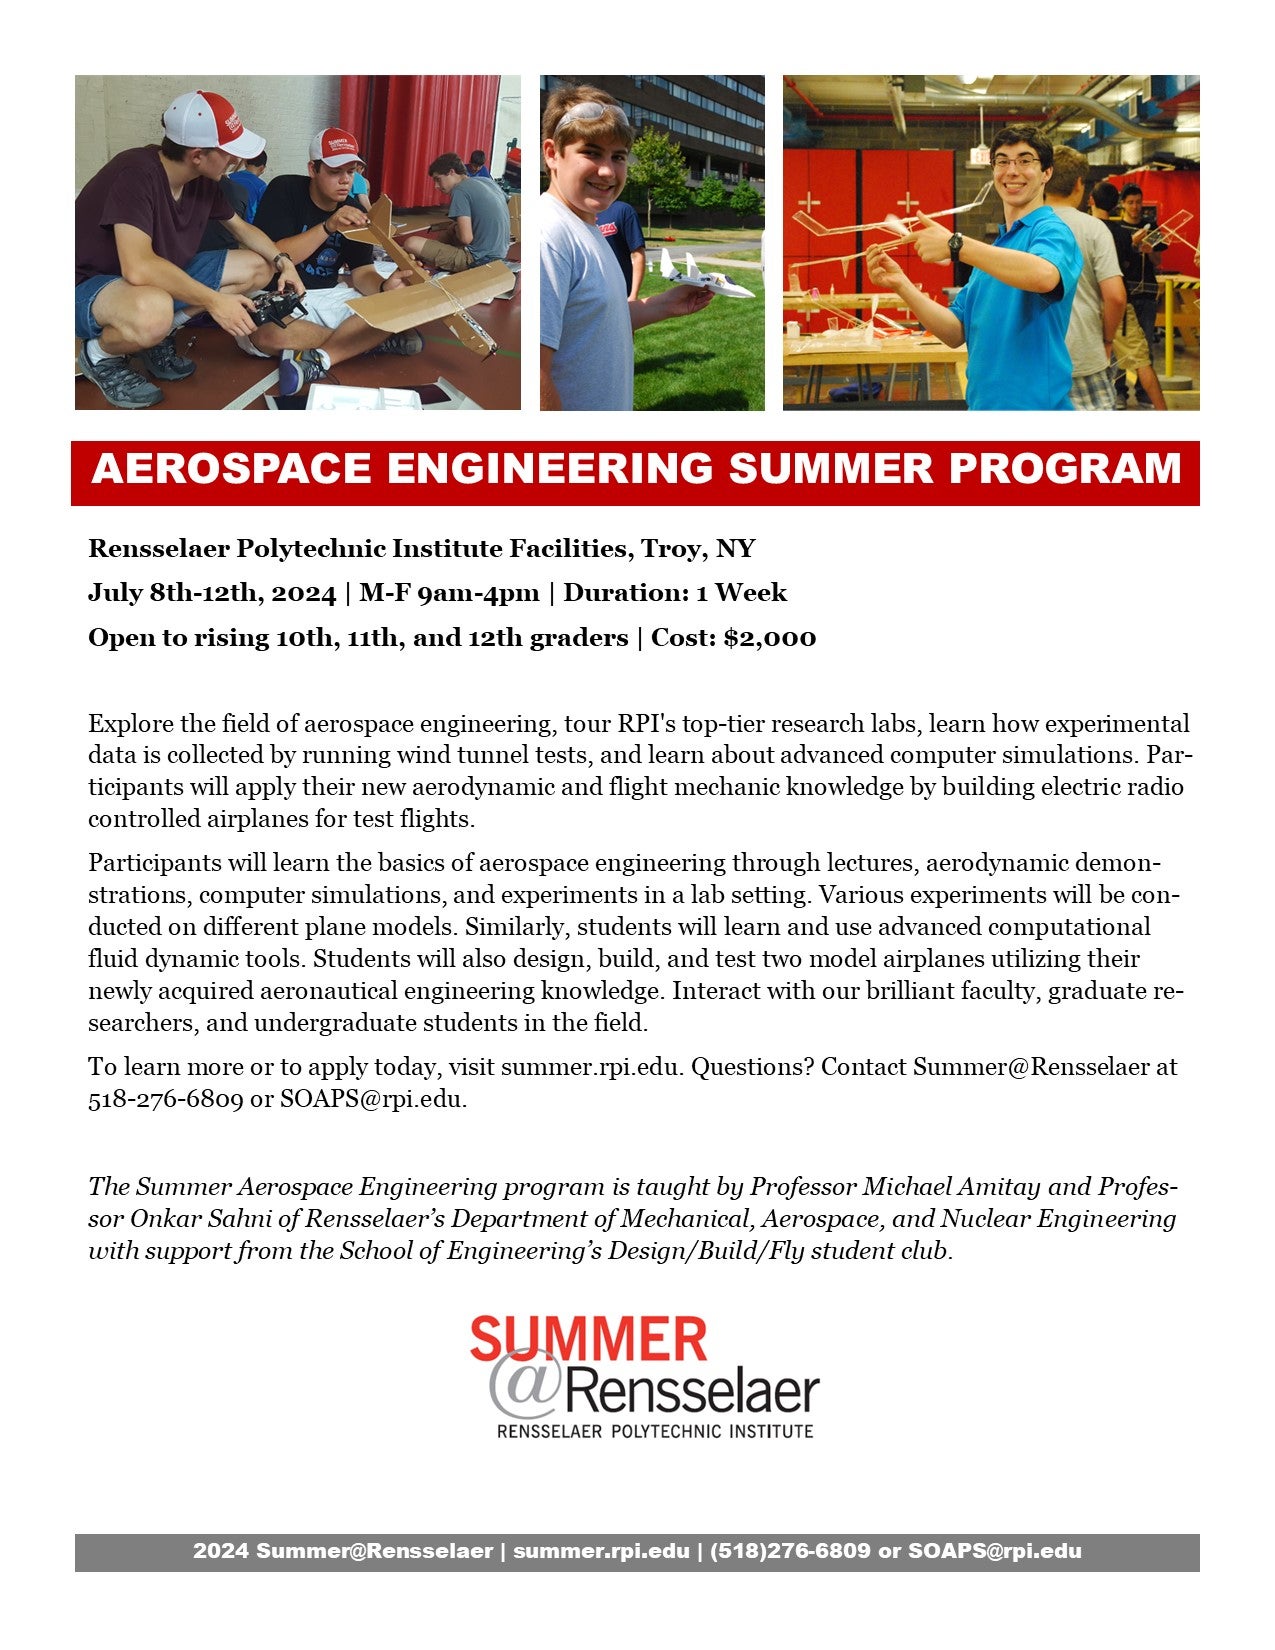 2024 Aerospace Engineering Program Flyer